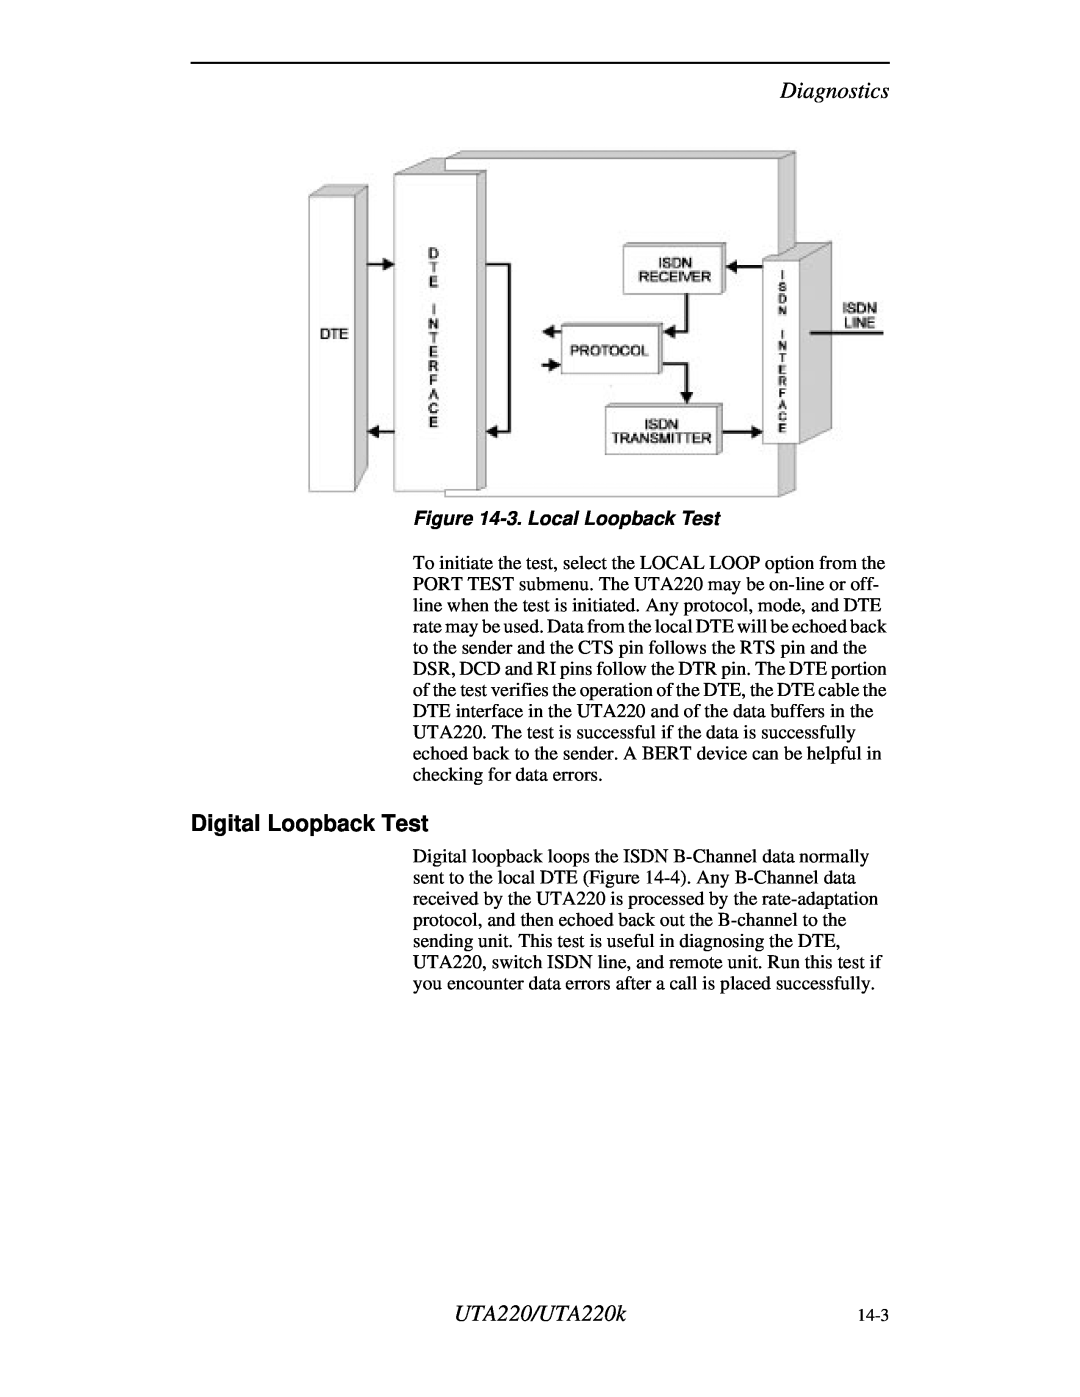 Northern UTA220/UTA220k manual Digital Loopback Test, 3. Local Loopback Test, Diagnostics 